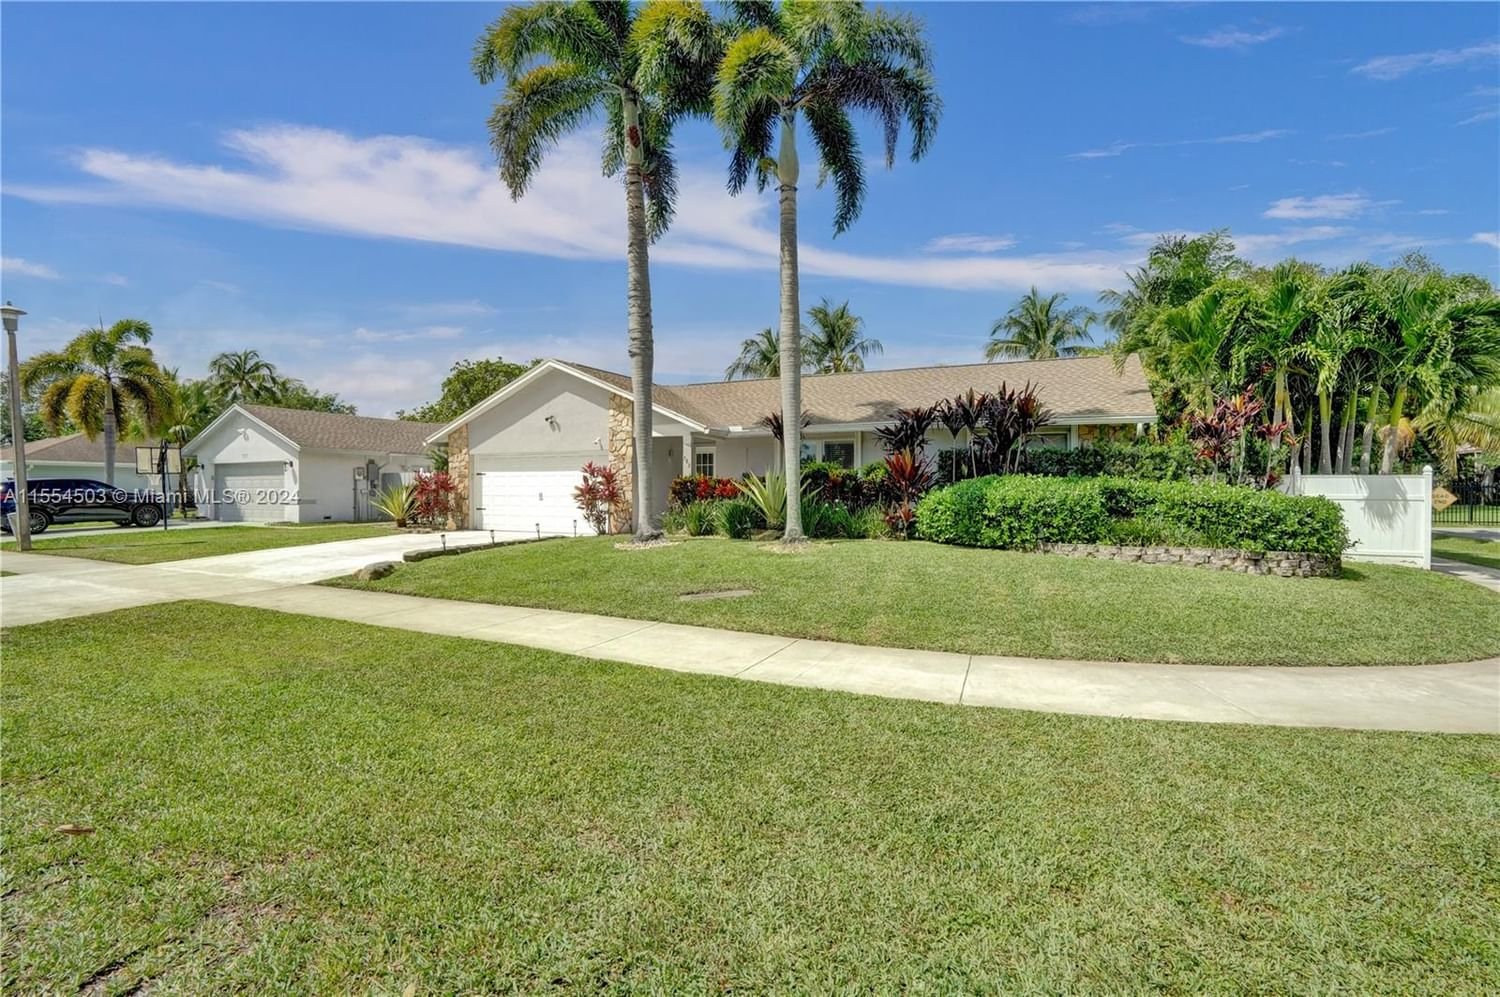 Real estate property located at 783 42nd Way, Broward County, RIVERGLEN EAST, Deerfield Beach, FL